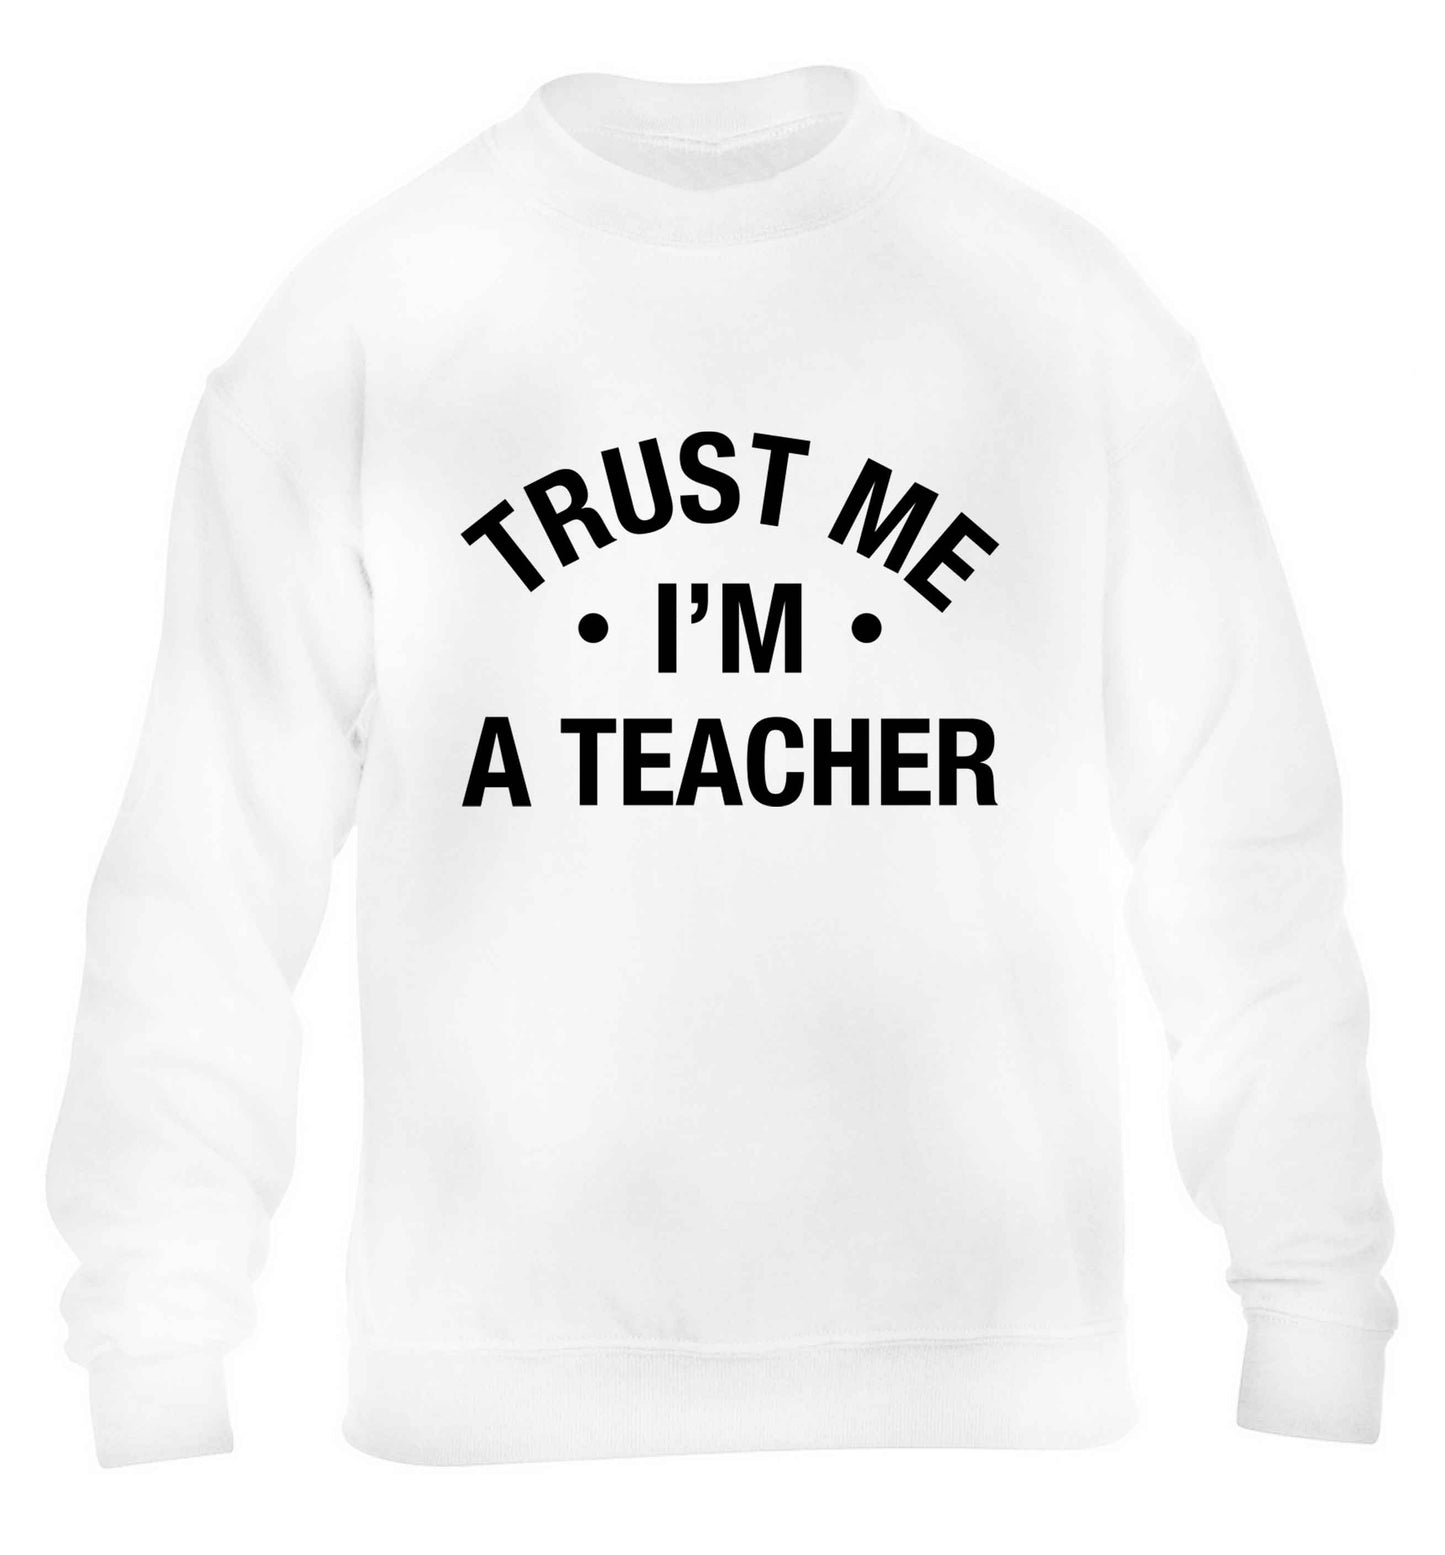 Trust me I'm a teacher children's white sweater 12-13 Years